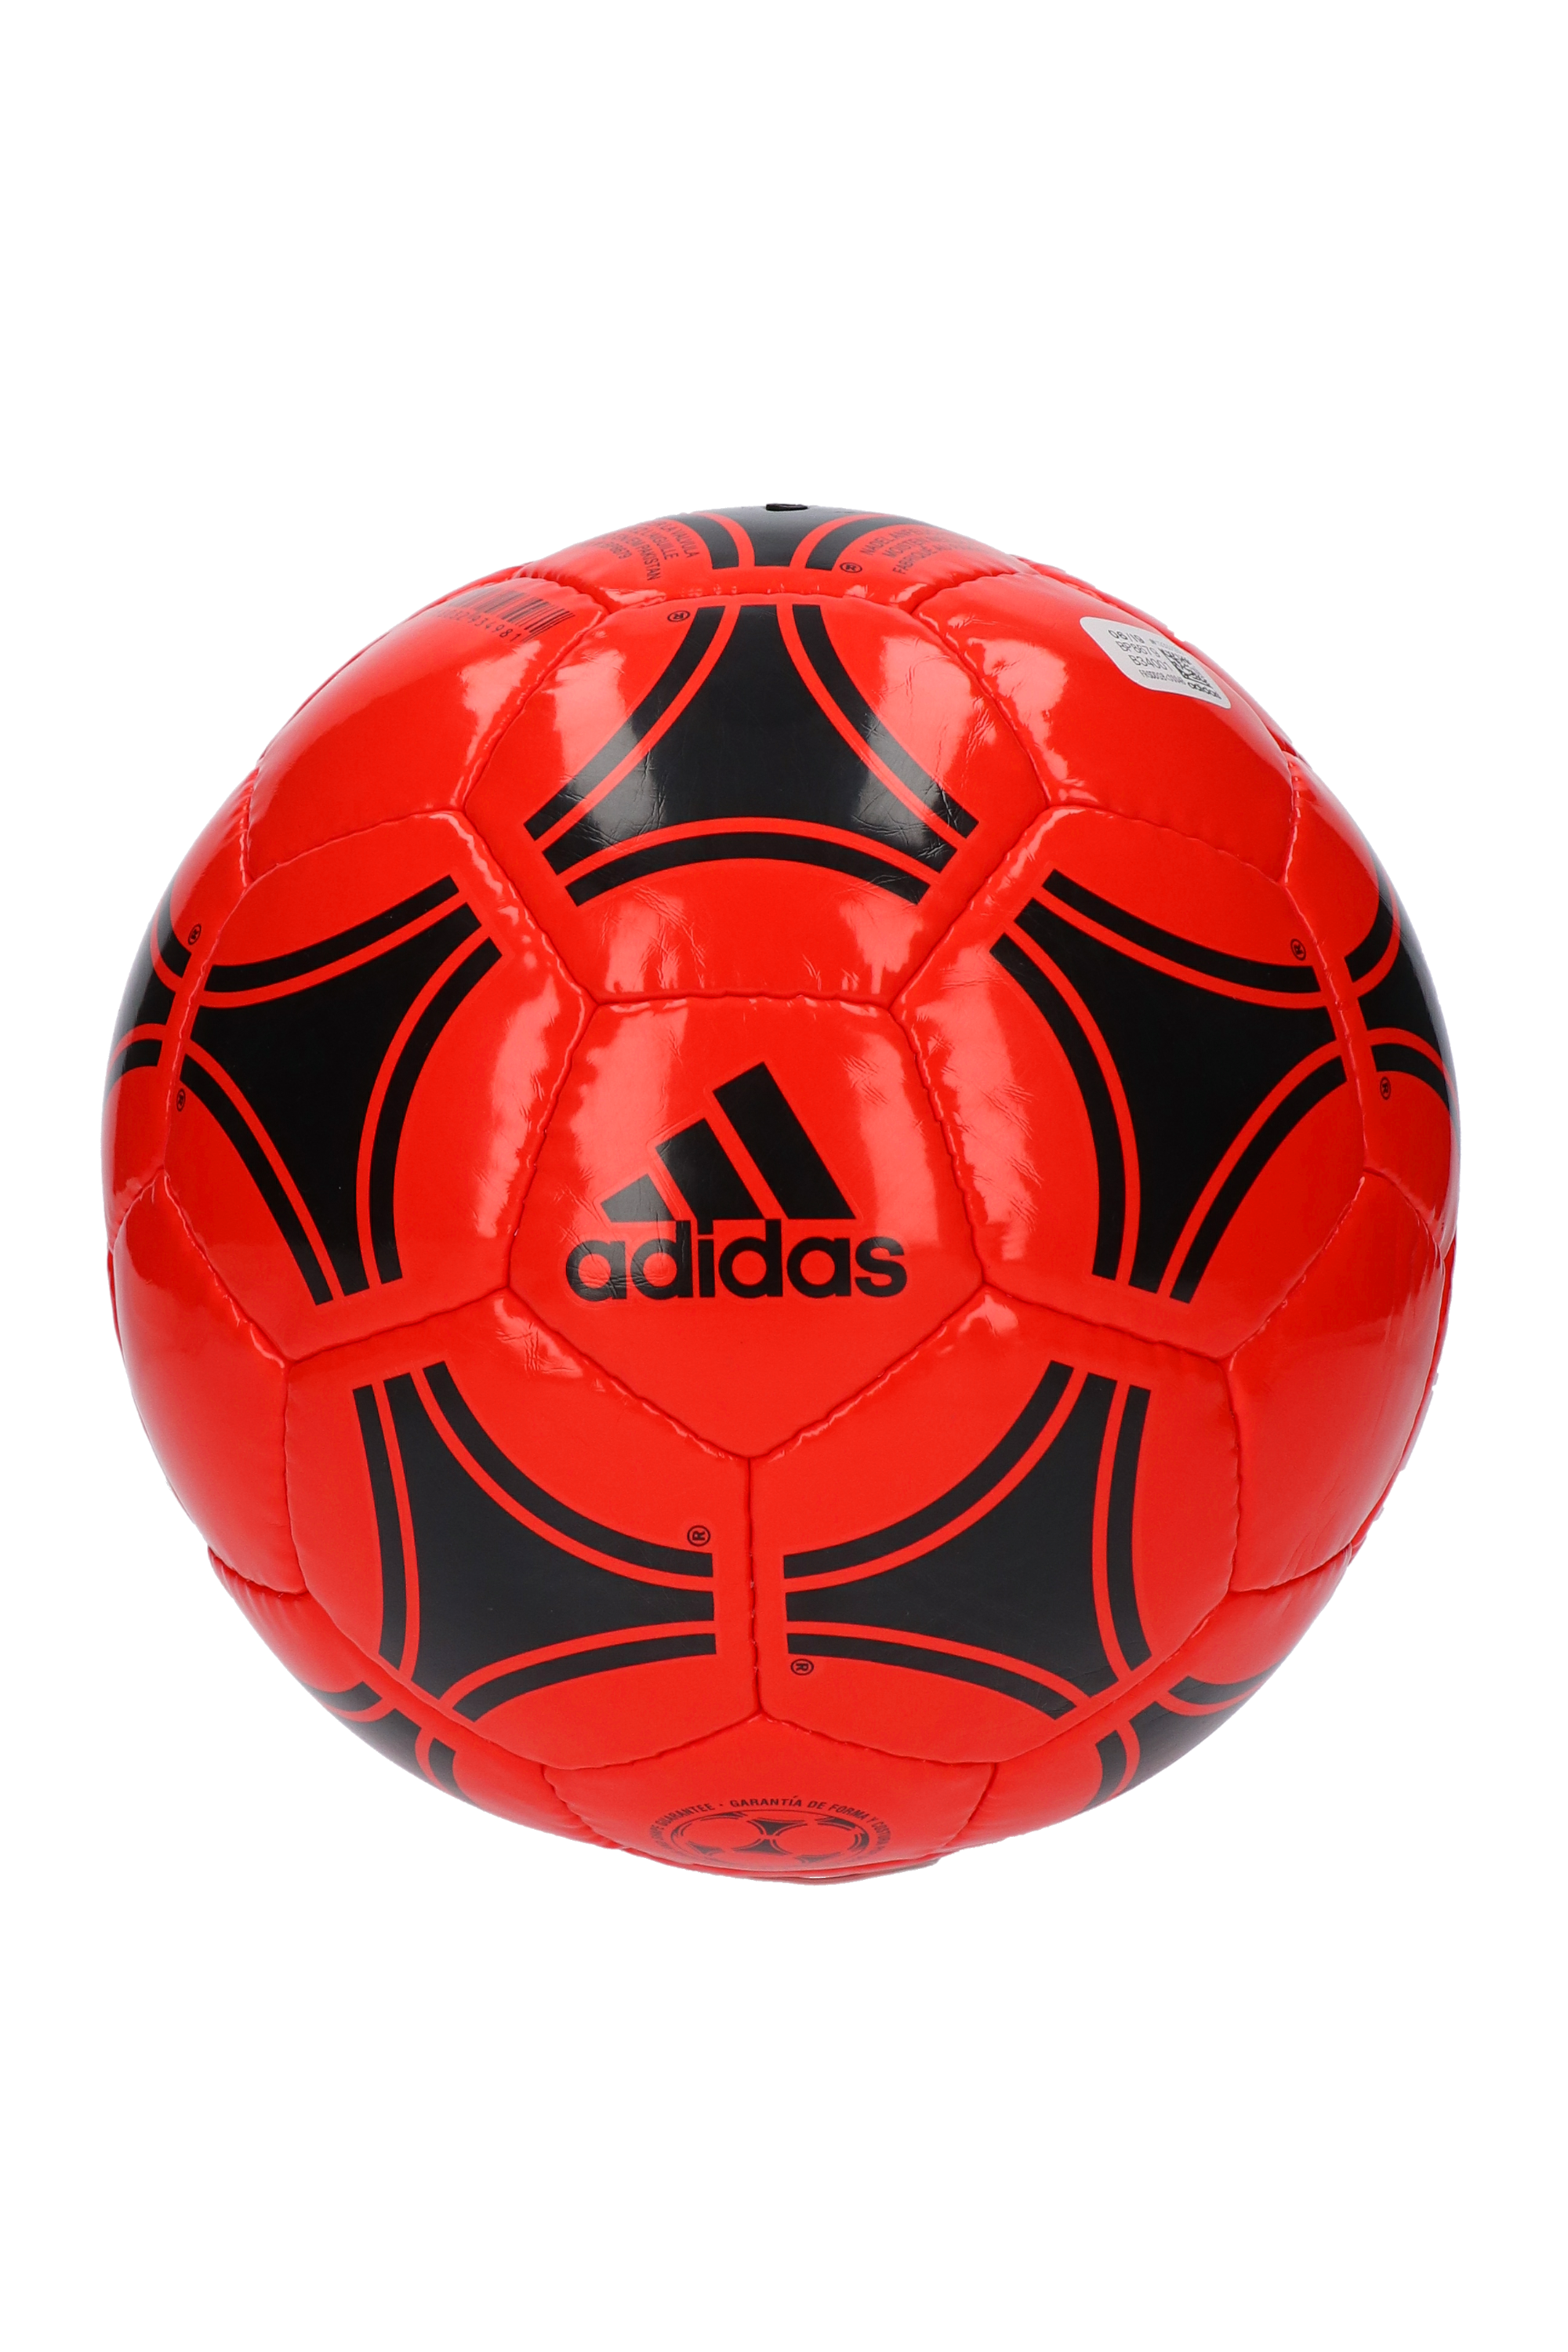 Ball adidas Tango Rosario size 5 R-GOL.com Football boots & equipment